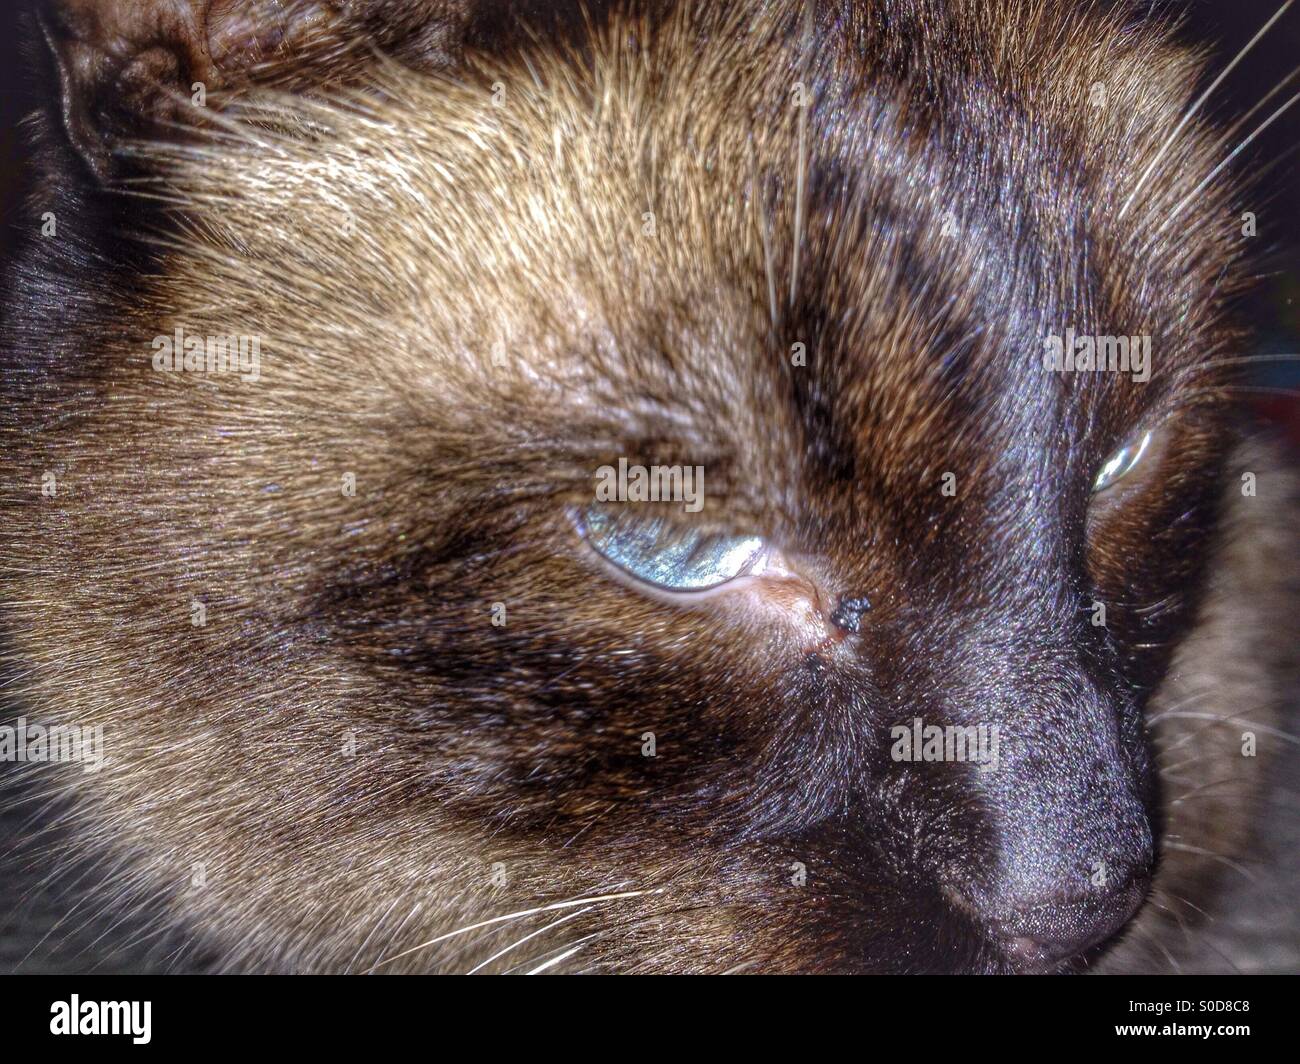 Closeup of a siamese cat Stock Photo